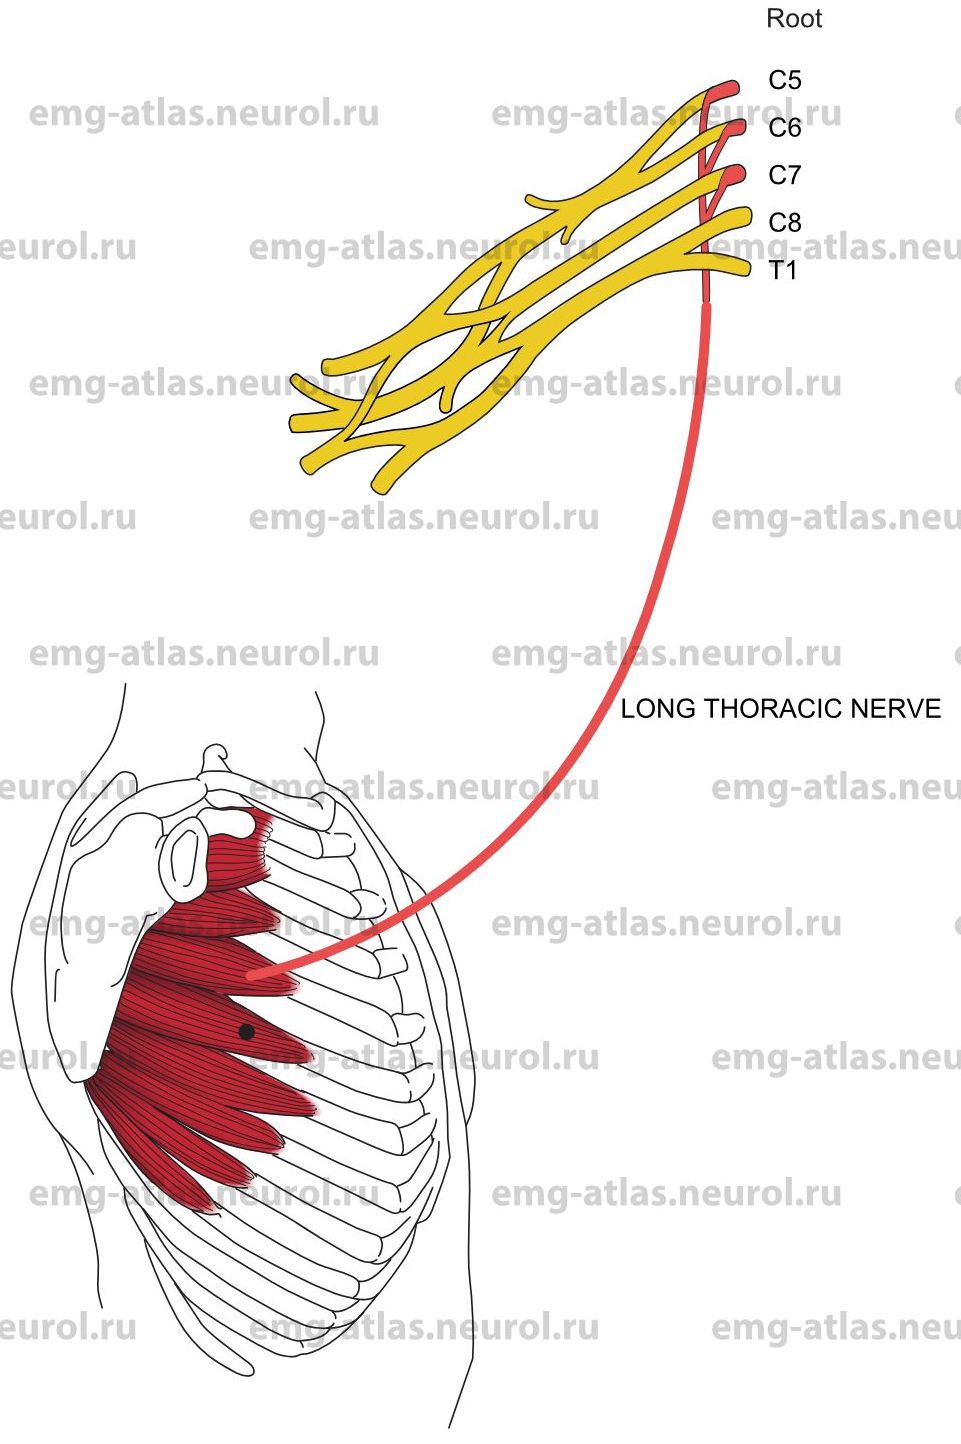 Long Thoracic Nerve Innervation - slidesharedocs